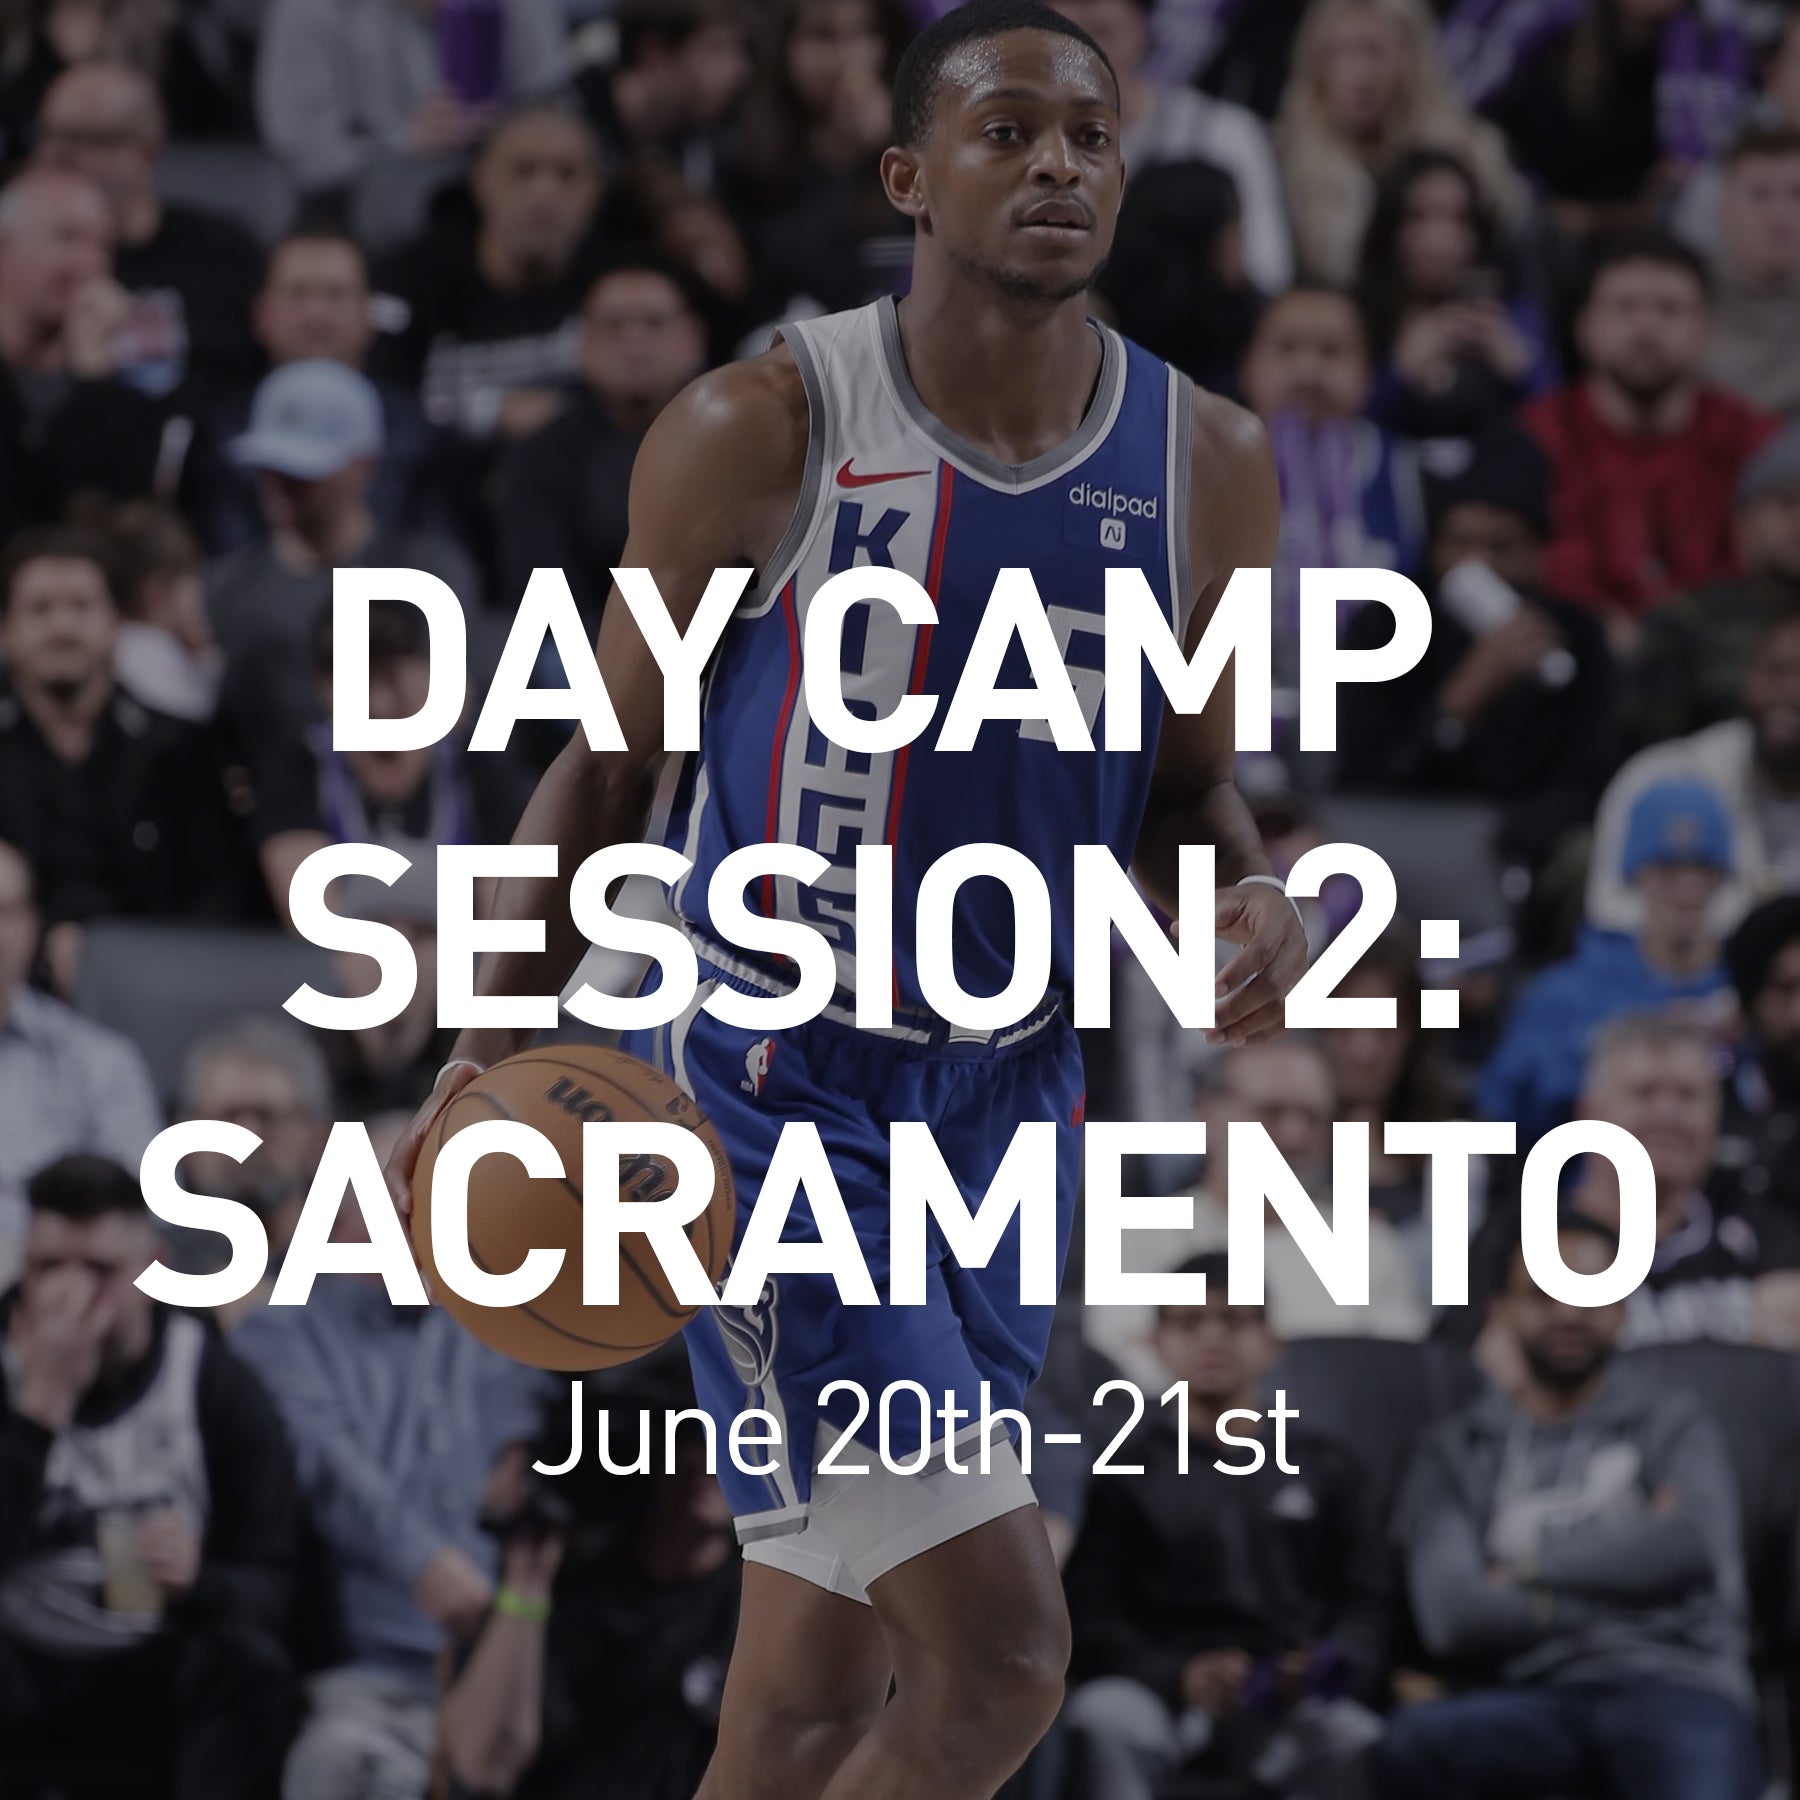 Day Camp Session 2: Sacramento June 20 - 21st